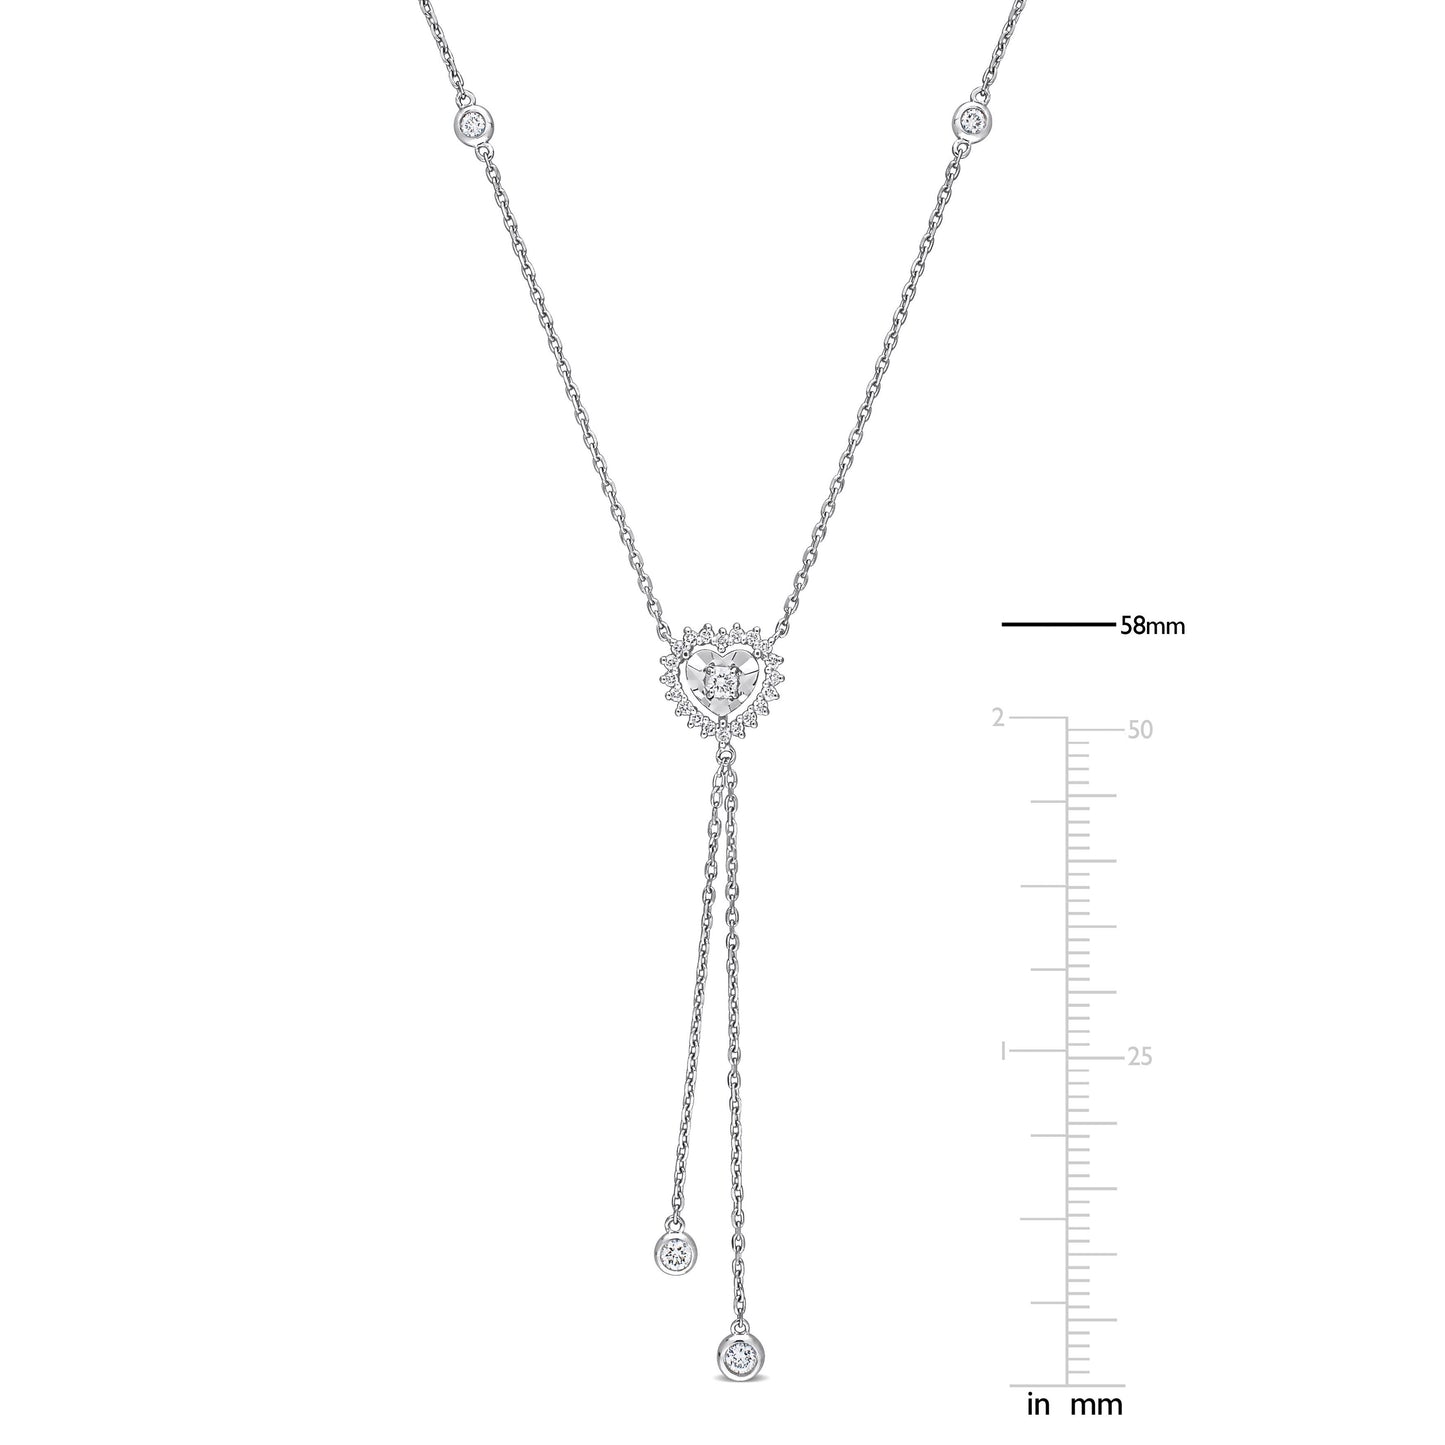 Lariat Heart Diamond Necklace in 14k White Gold